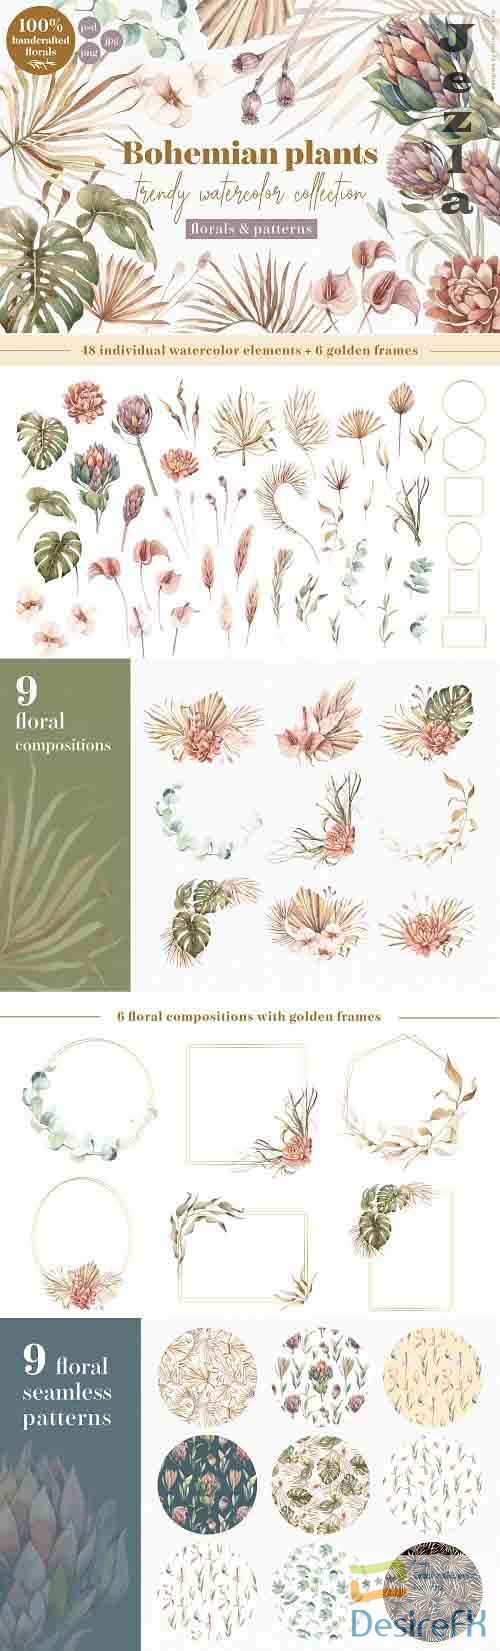 Bohemian plants - trendy watercolors - 4891781